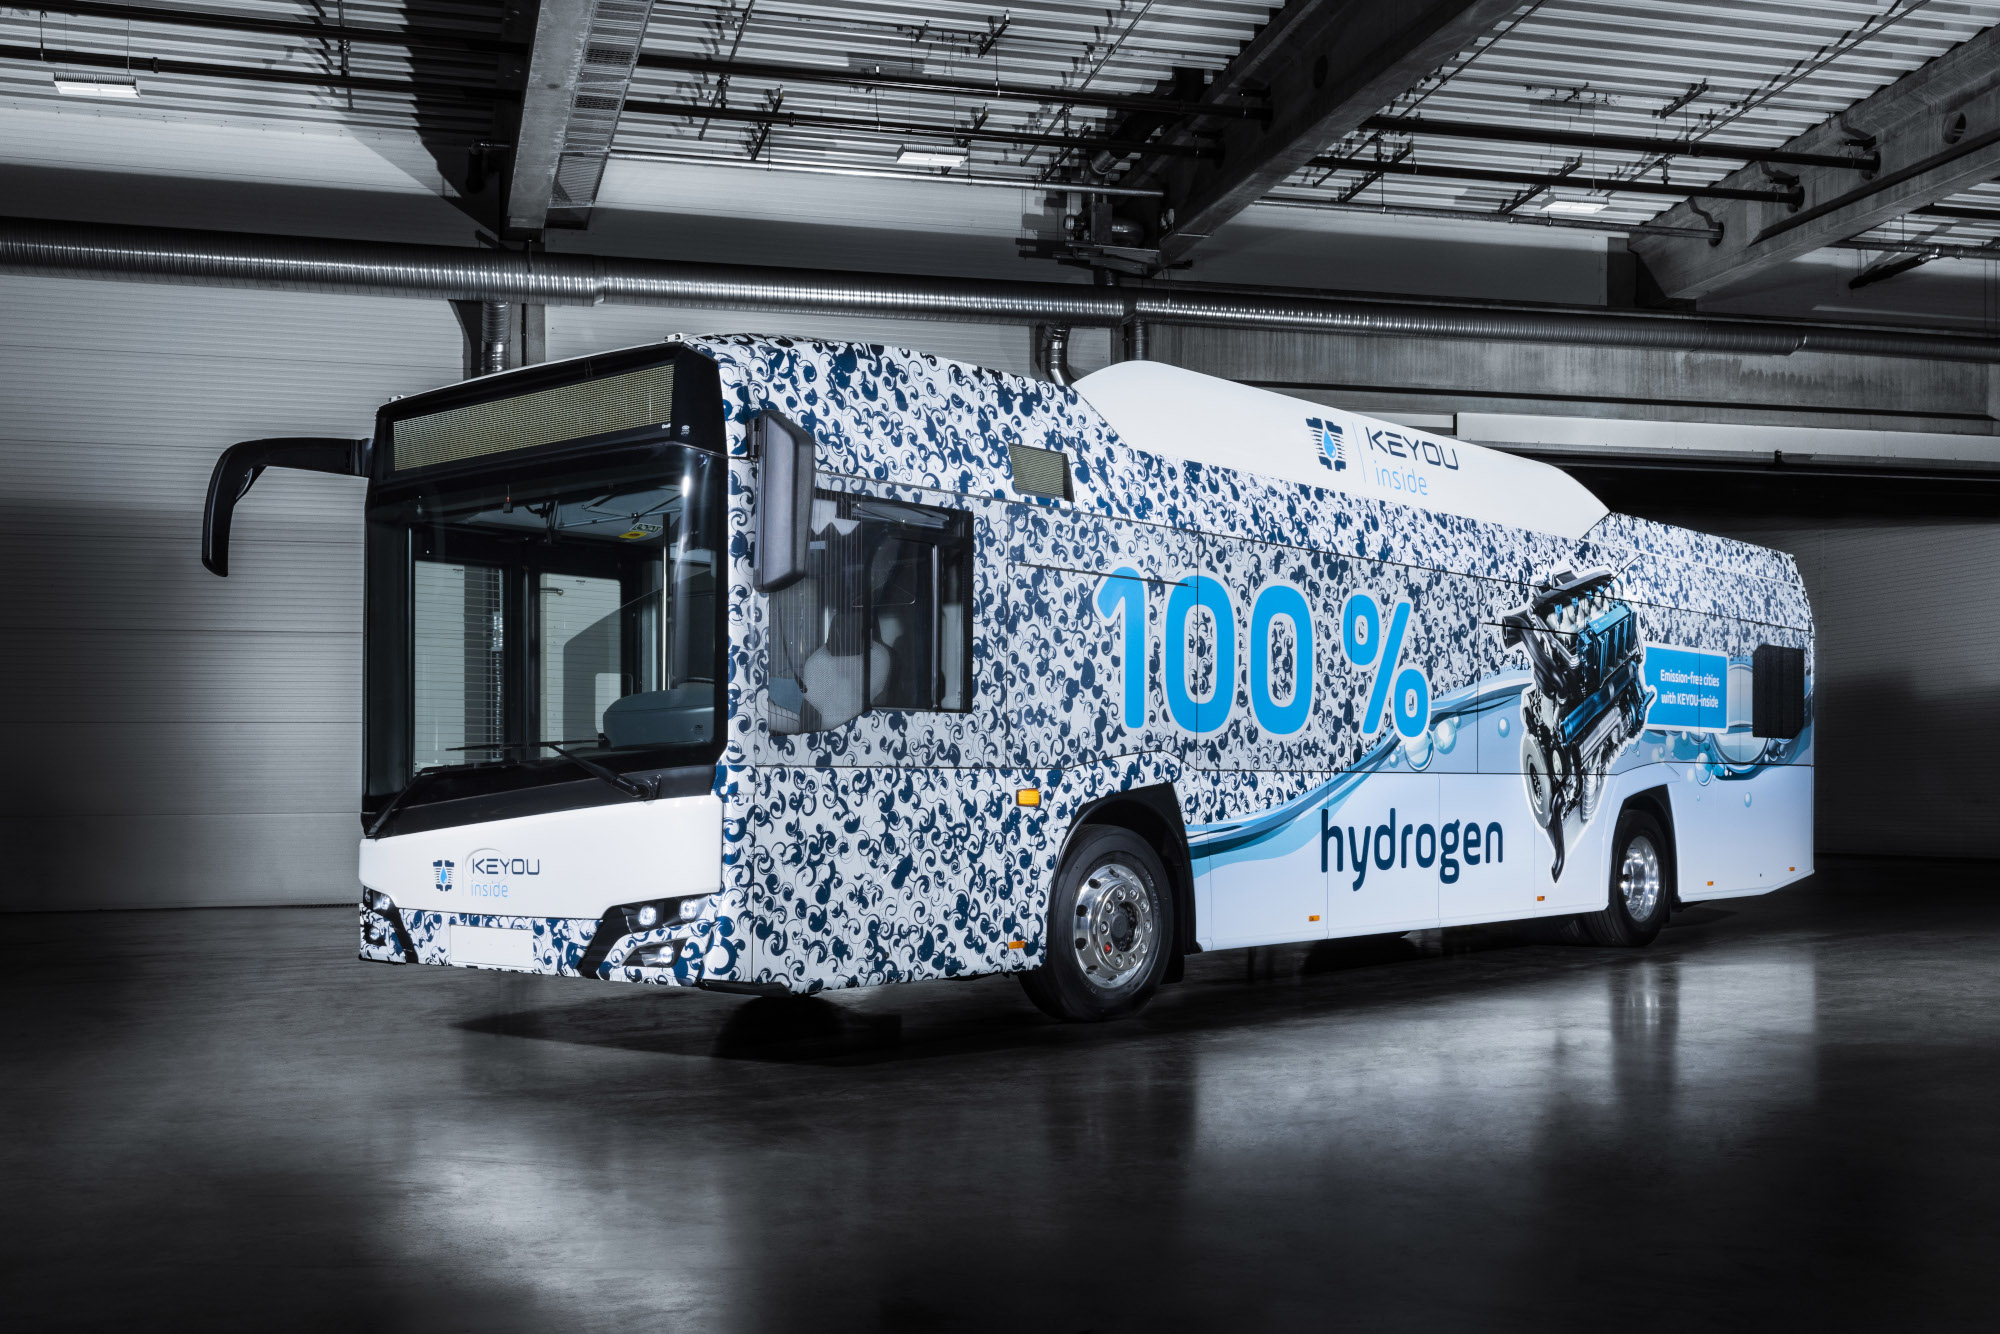 Hydrogen bus prototype unveiling at IAA